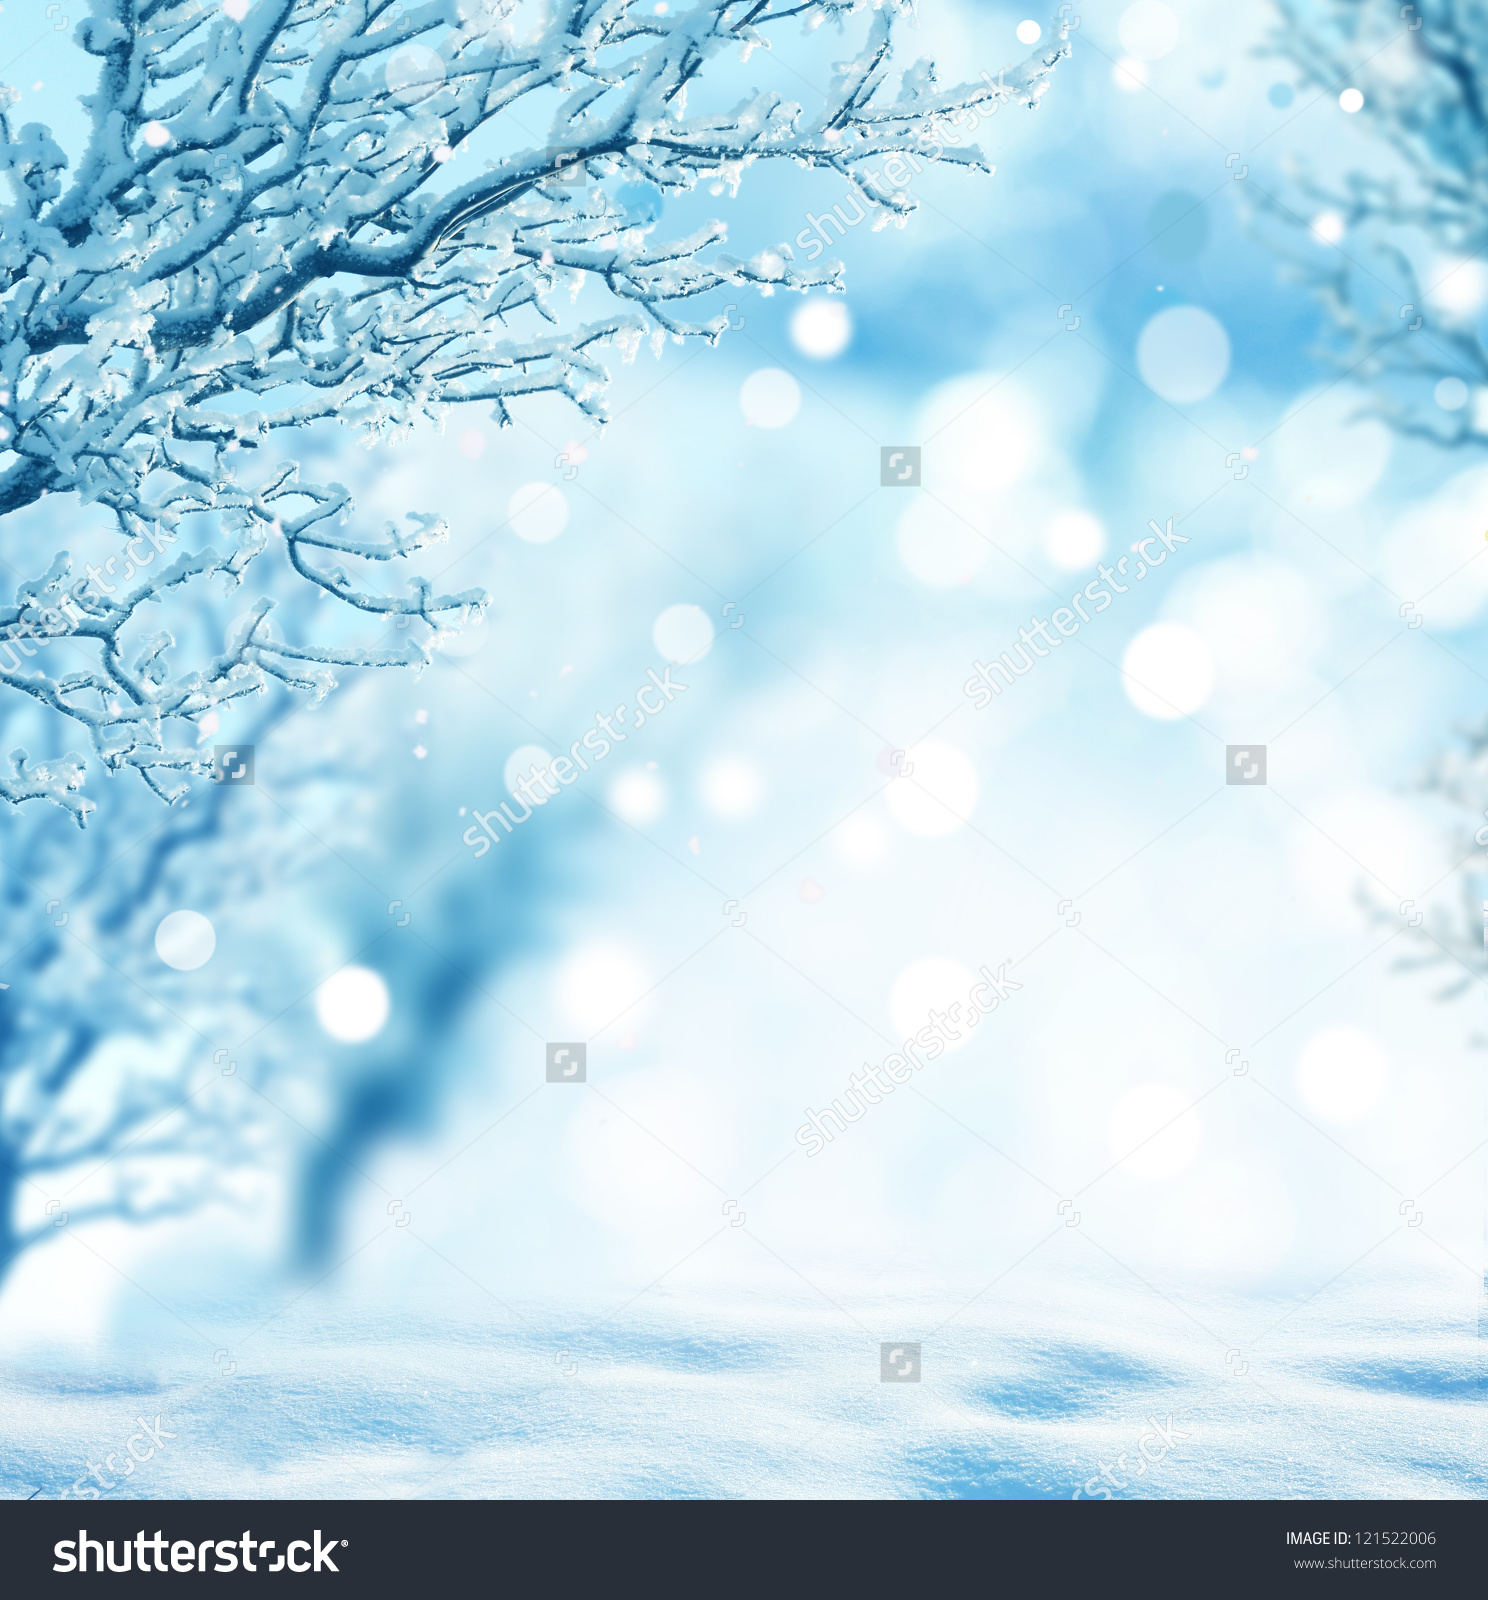 Background Winter Image